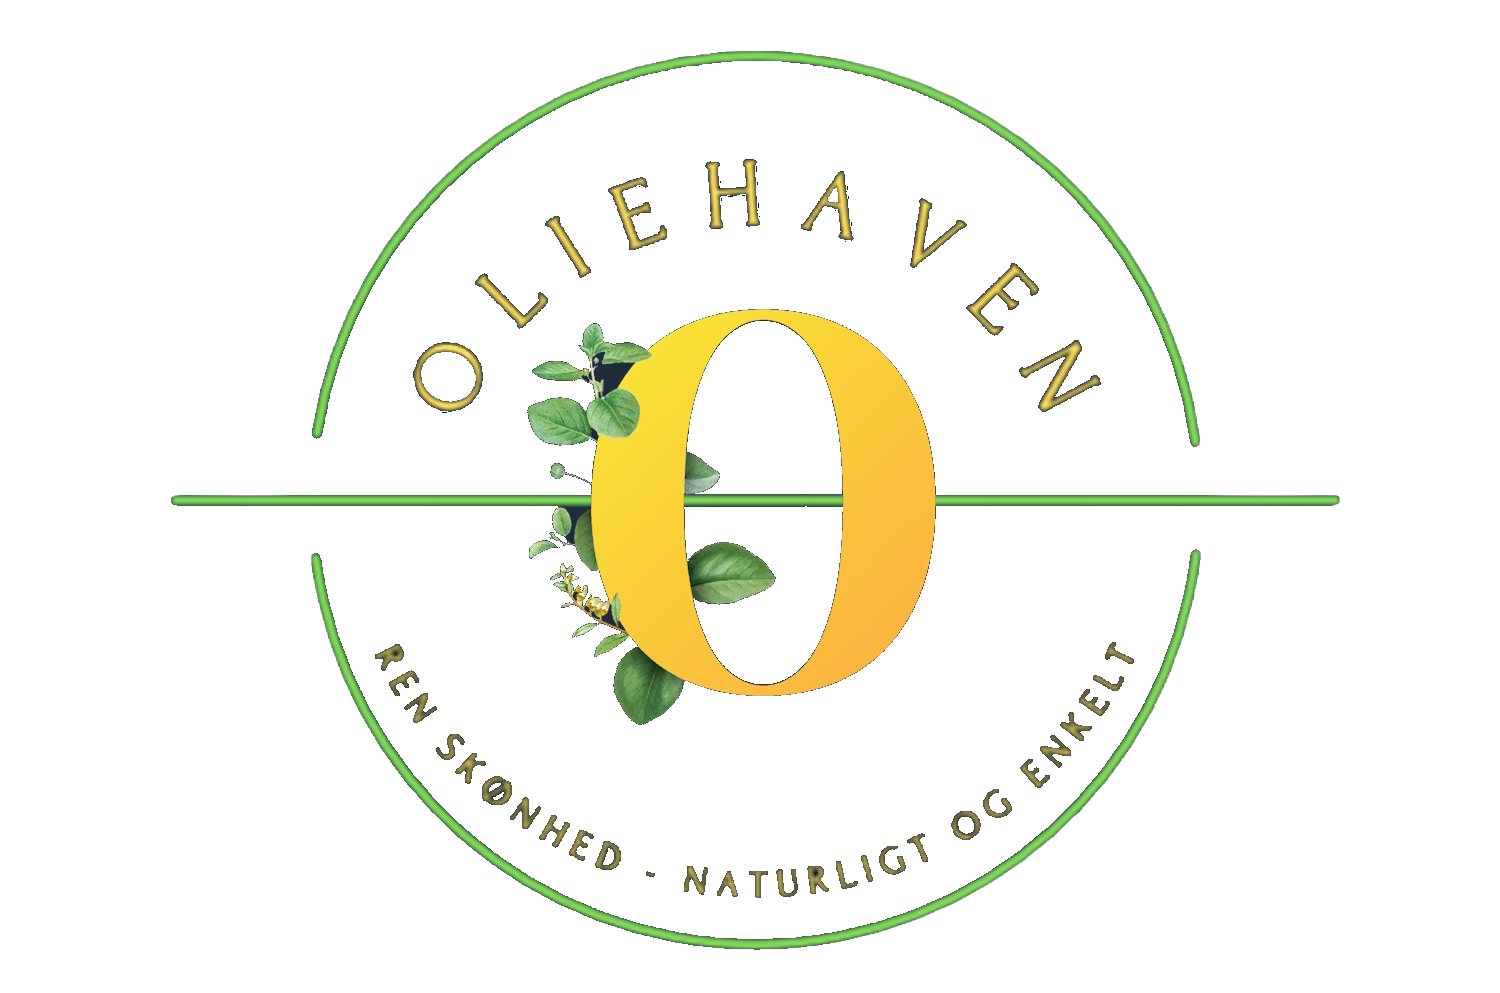 Oliehaven